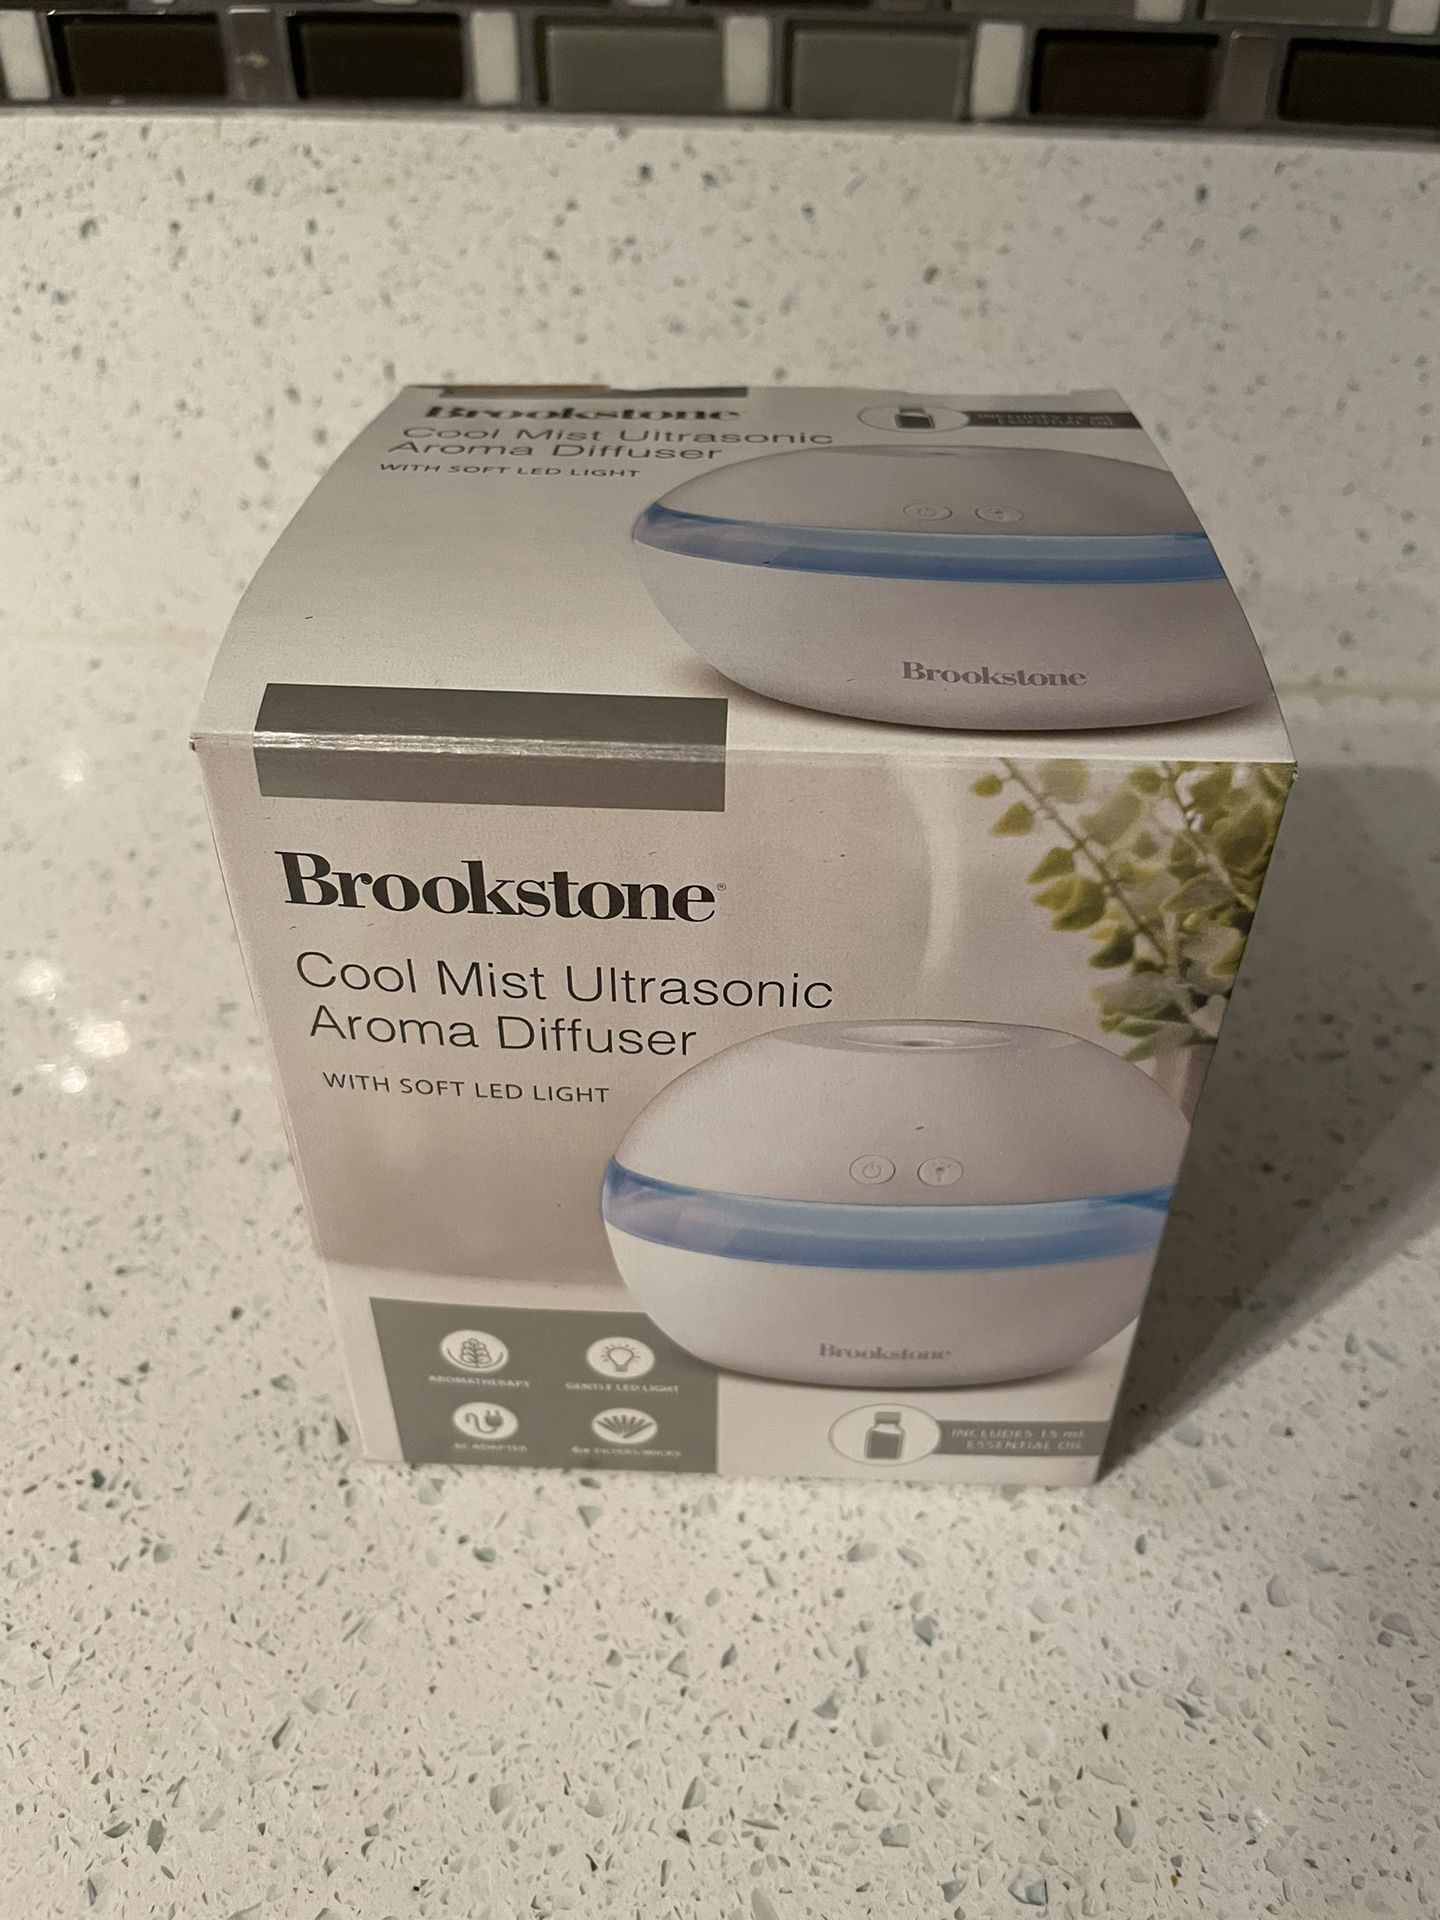 Brookstone Cool Mist Ultrasonic Aroma Diffuser